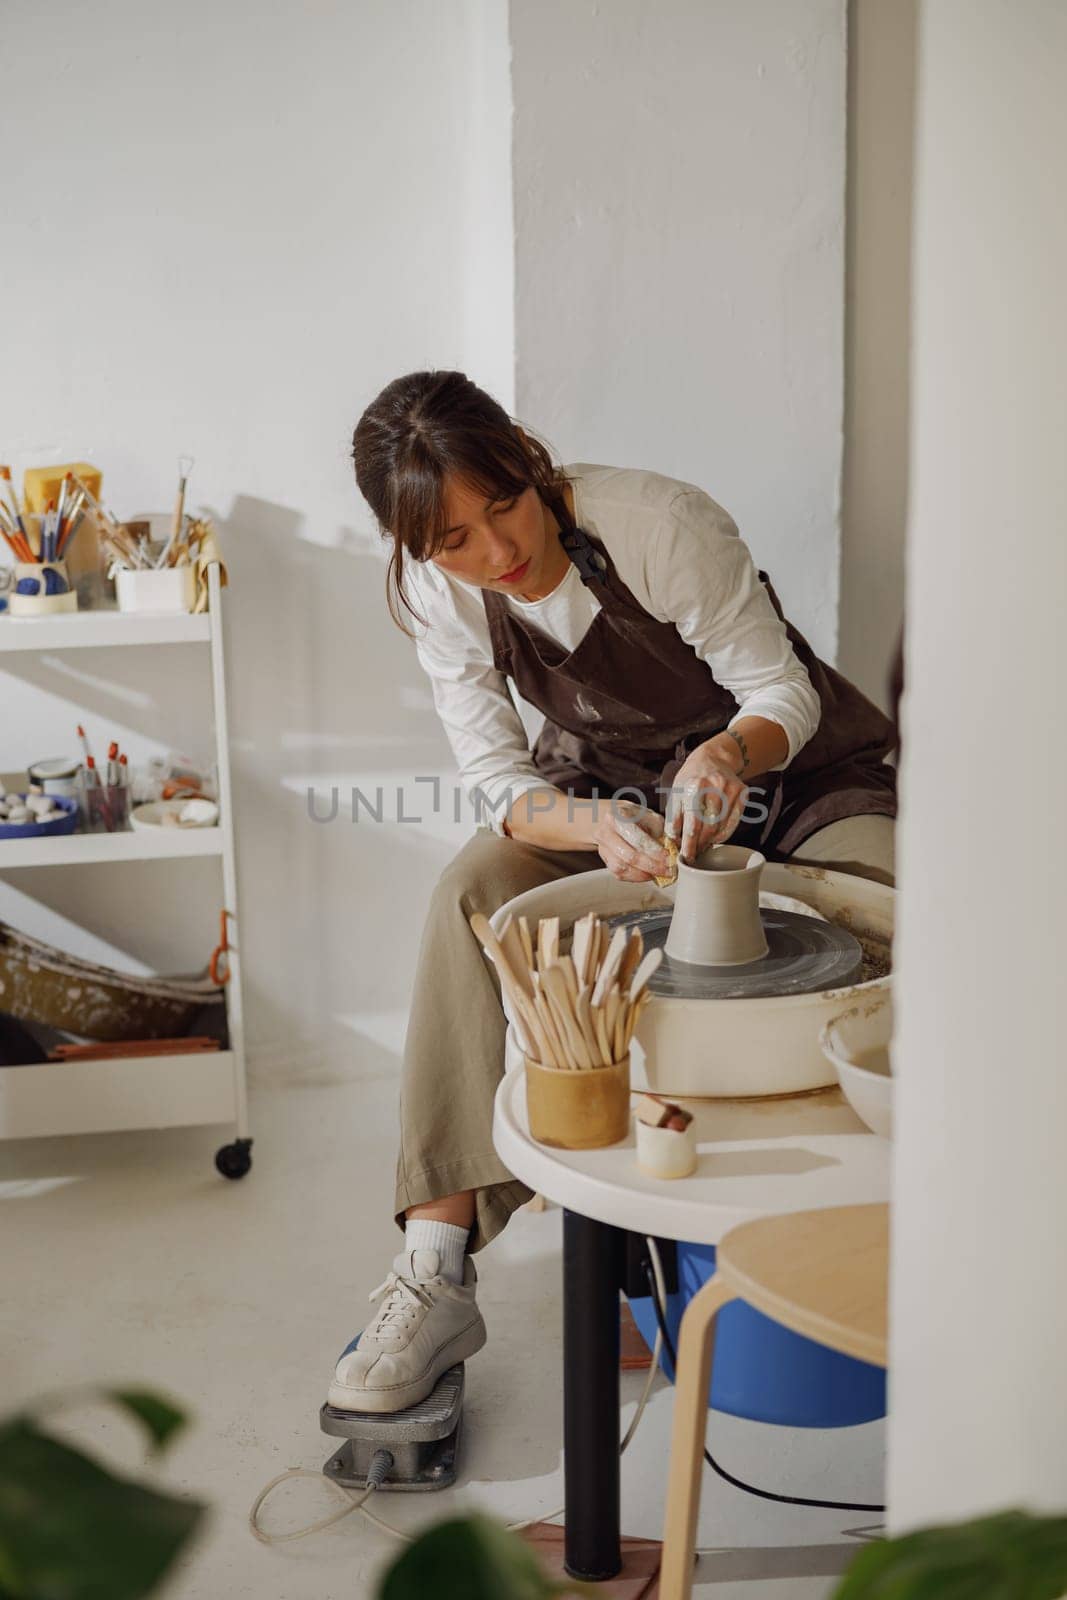 Professional female artisan shaping clay bowl in pottery studio. Ceramics art concept by Yaroslav_astakhov